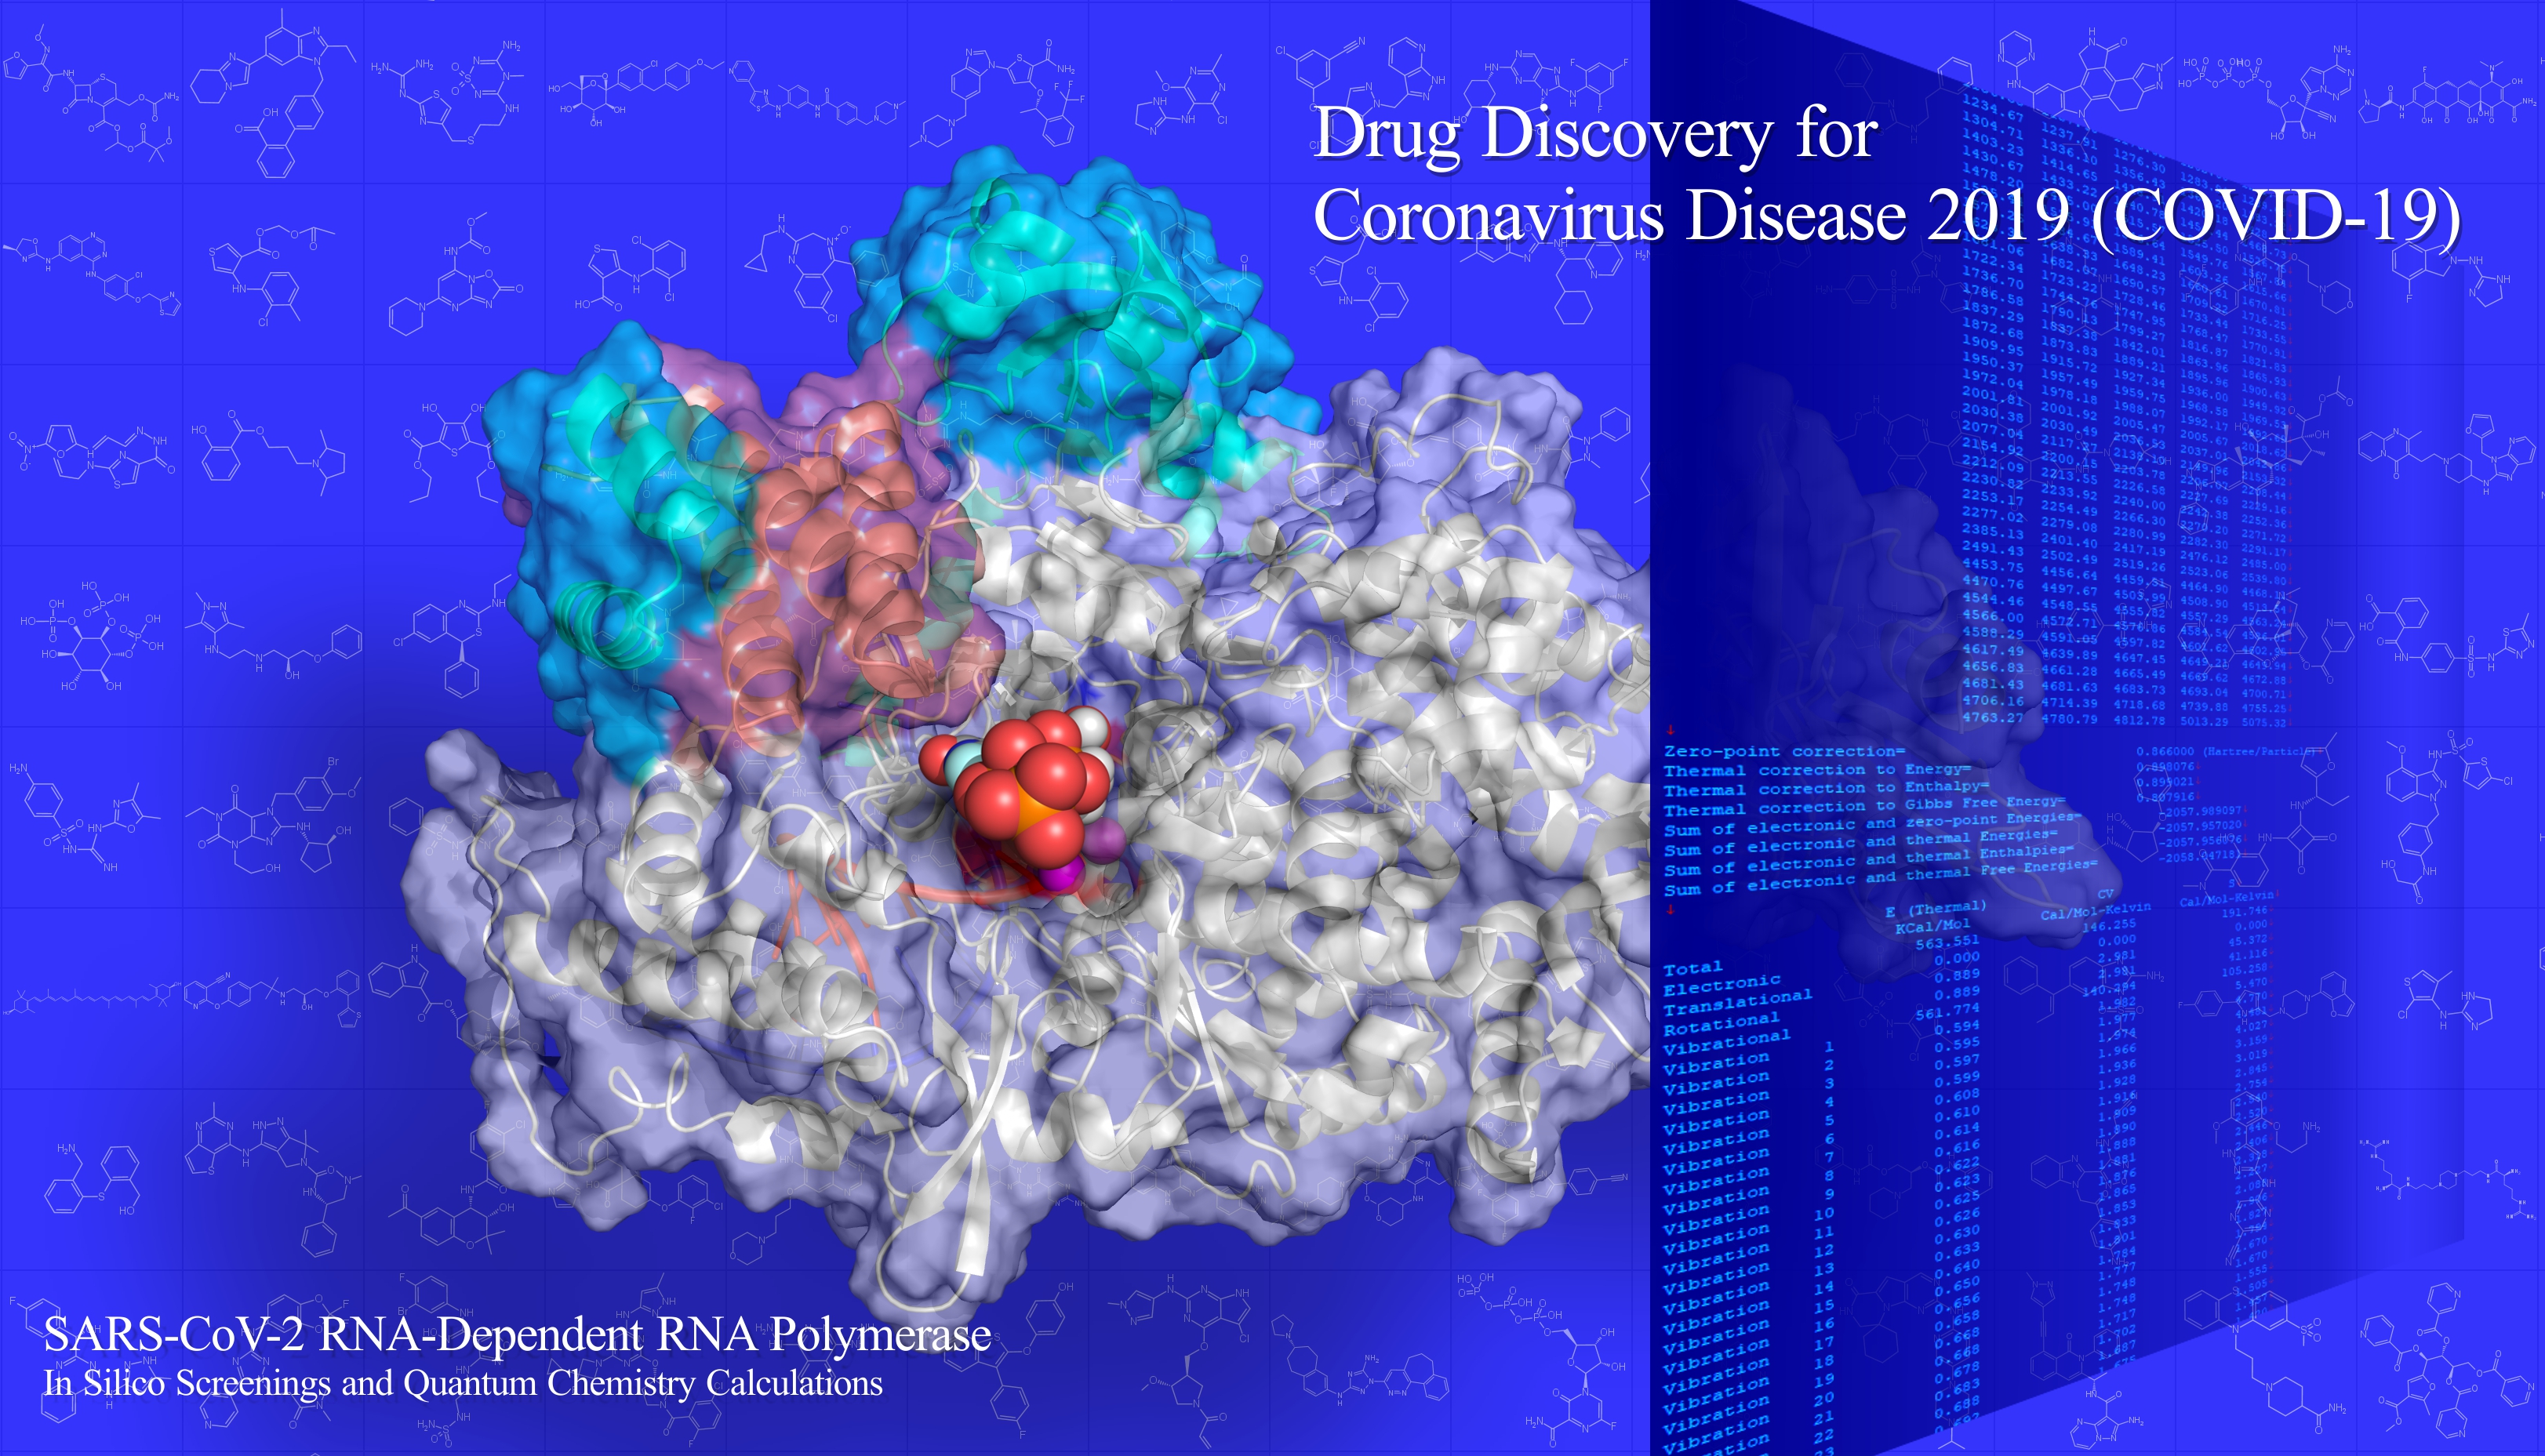 Potential anti-SARS-CoV-2 drug candidates targeting RNA-dependent RNA polymerase